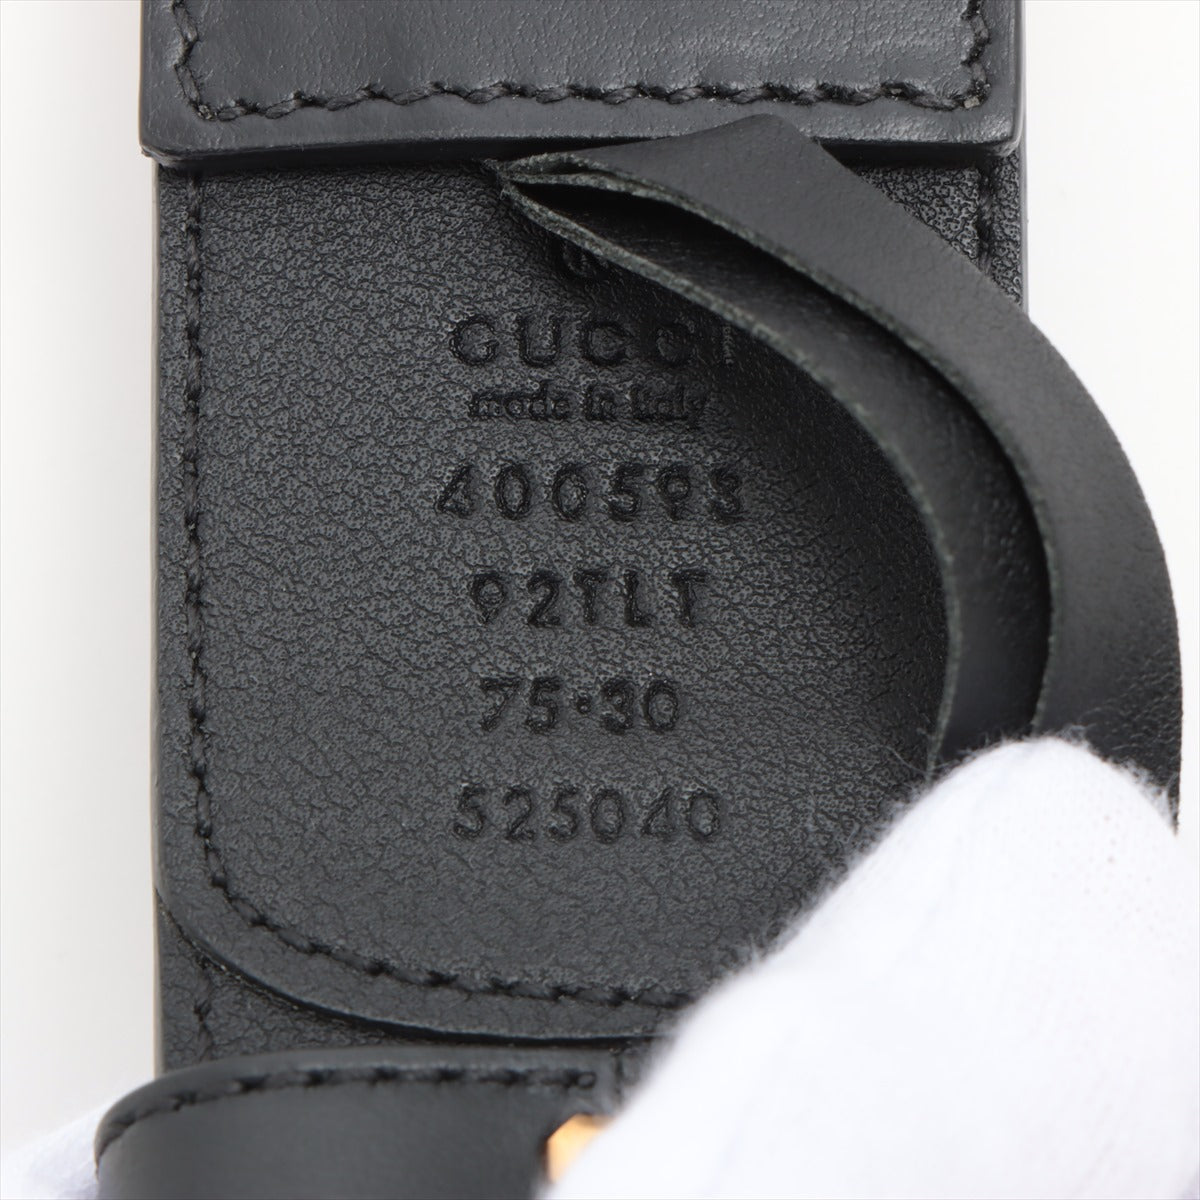 Gucci 400593 GG Marmont Belt 75・30 PVC & leather black x beige